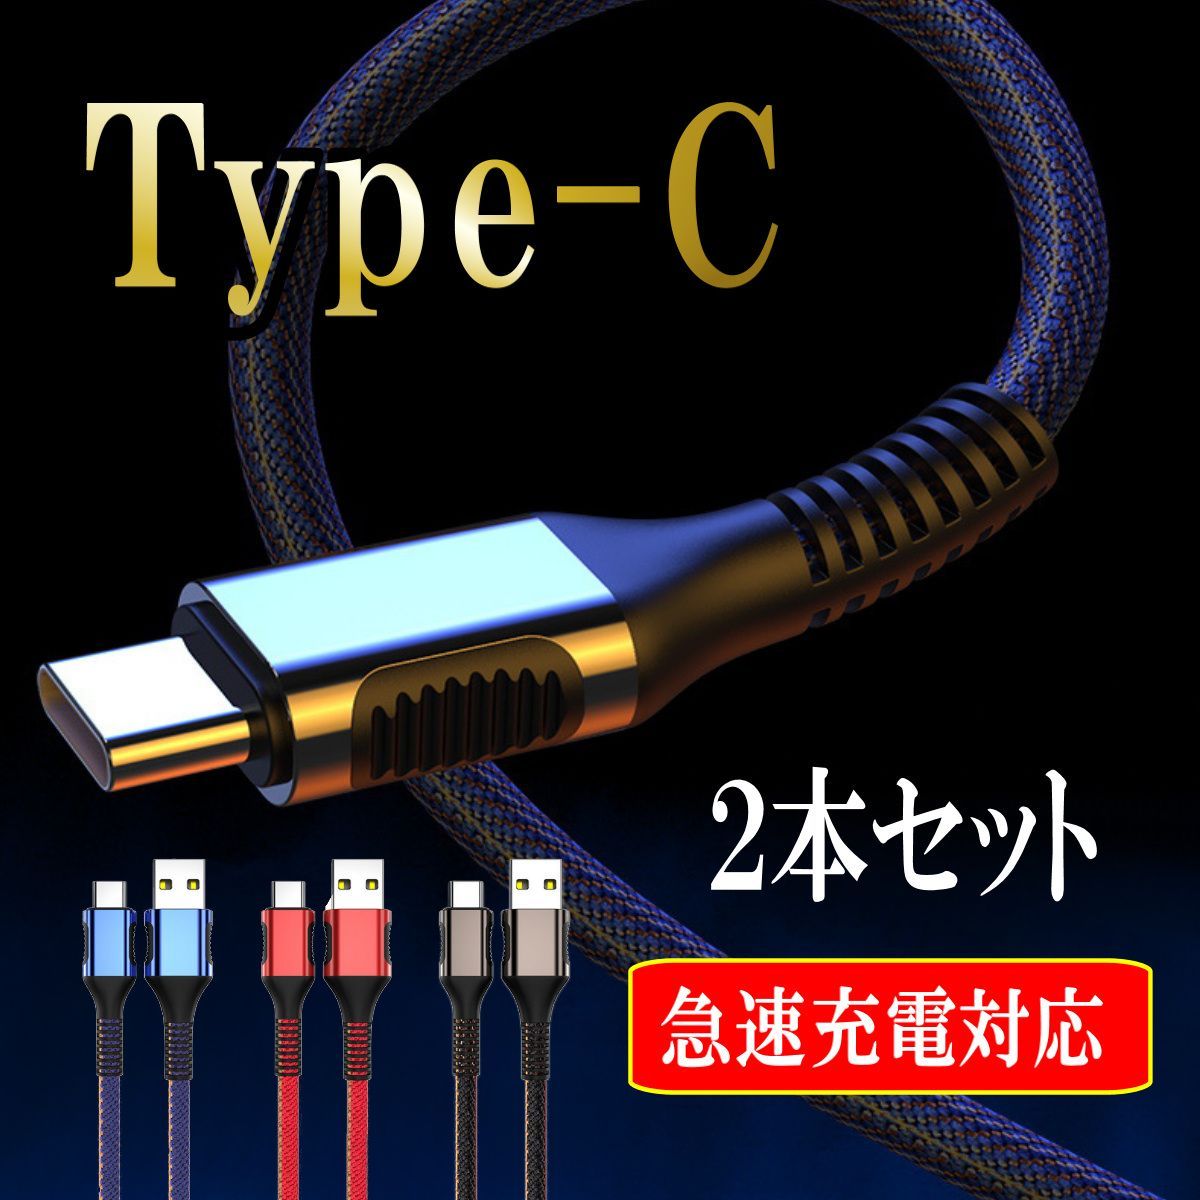 x-2 Type-C タイプC USB-C 急速充電 2本セット 充電ケーブル - 5